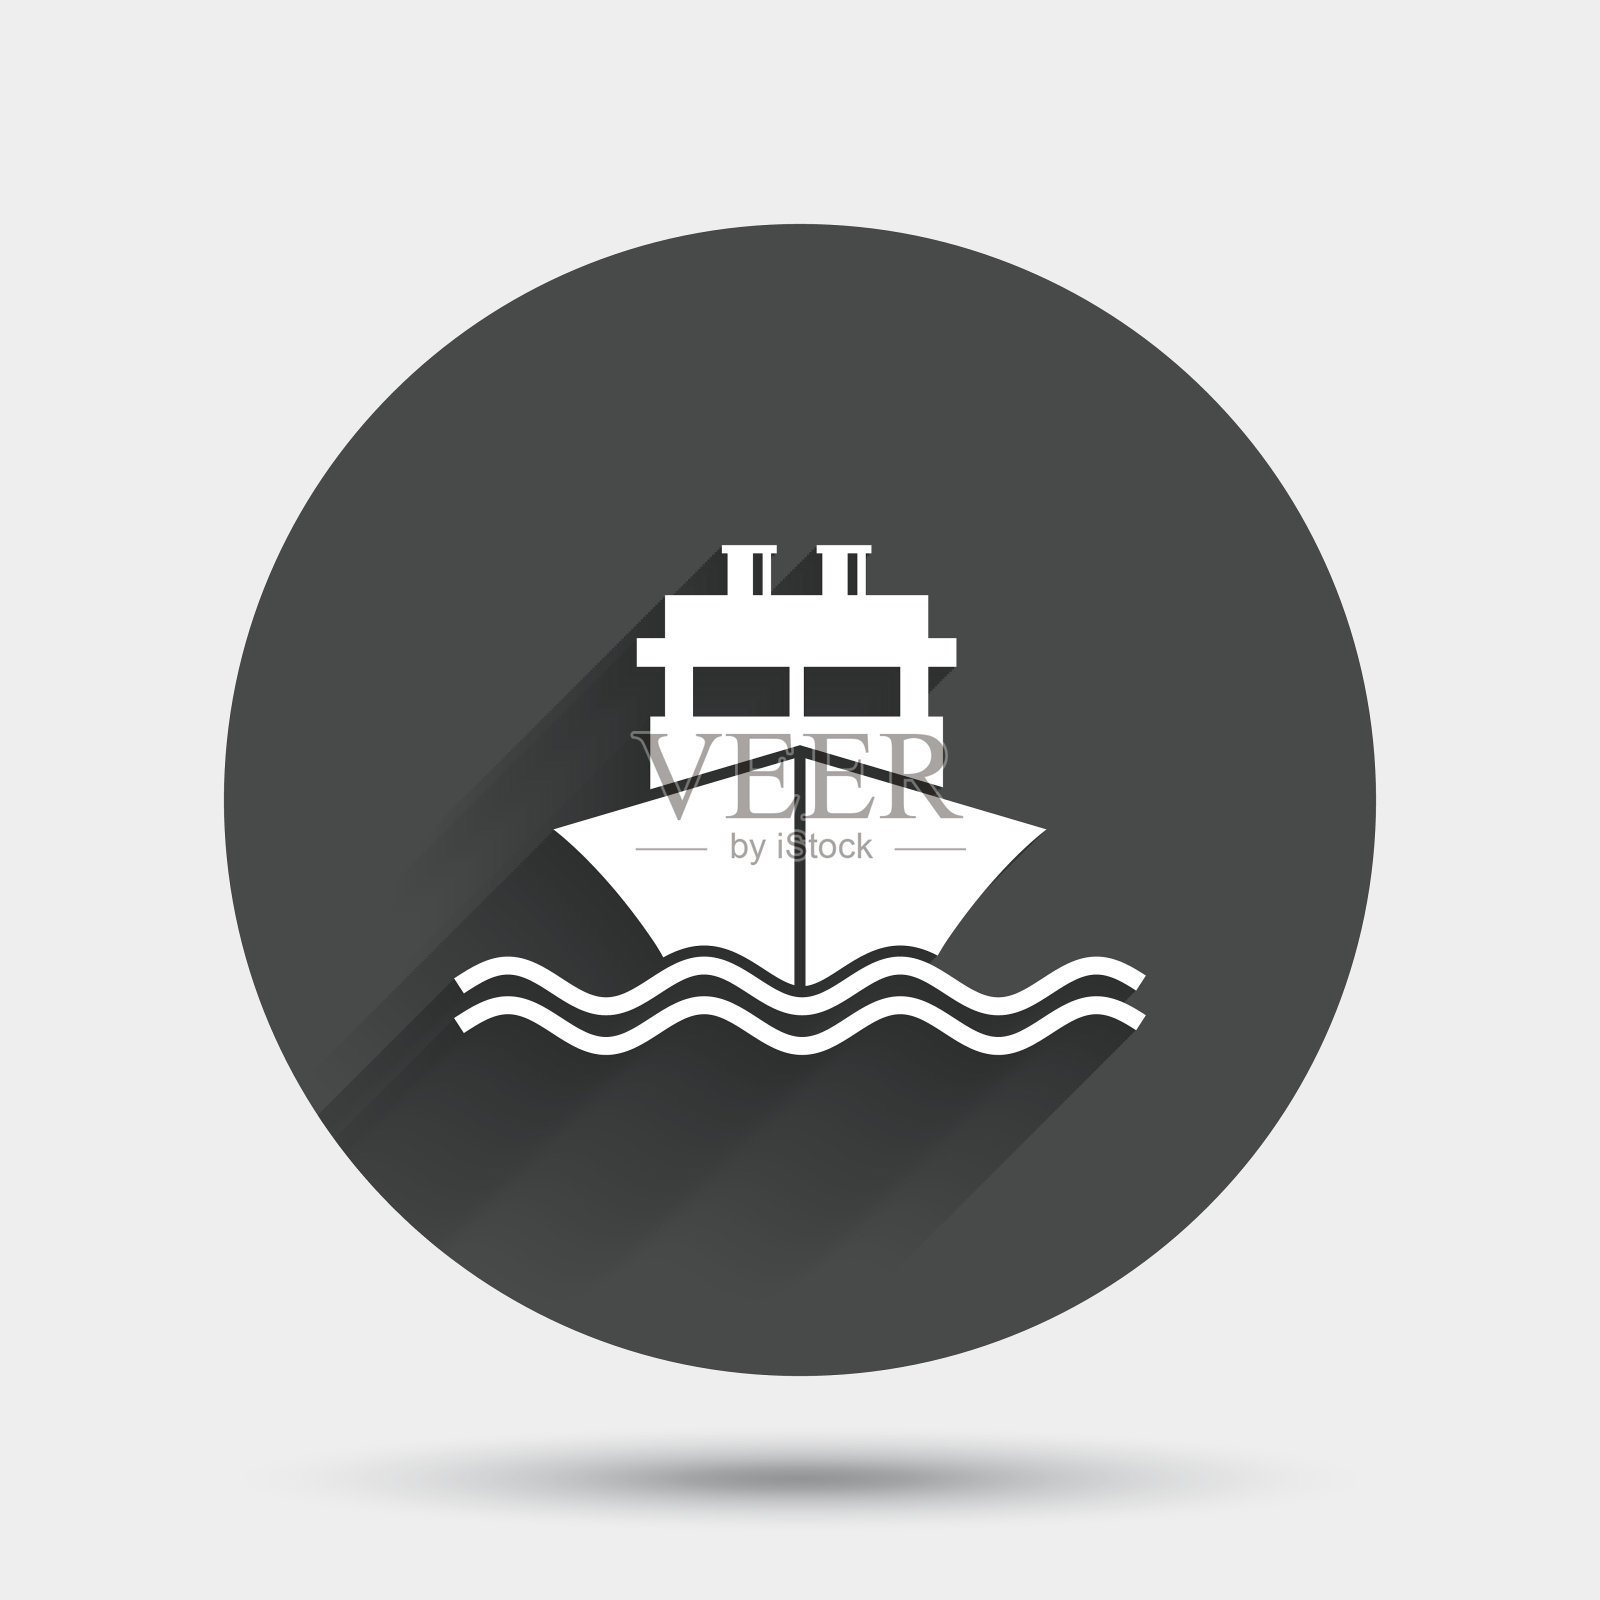 Iconbutton象形圖乘船遊覽圖標, 河流, 象形圖, 船PNG去背圖片素材免費下載，免摳圖設計圖案下載 - Pngtree